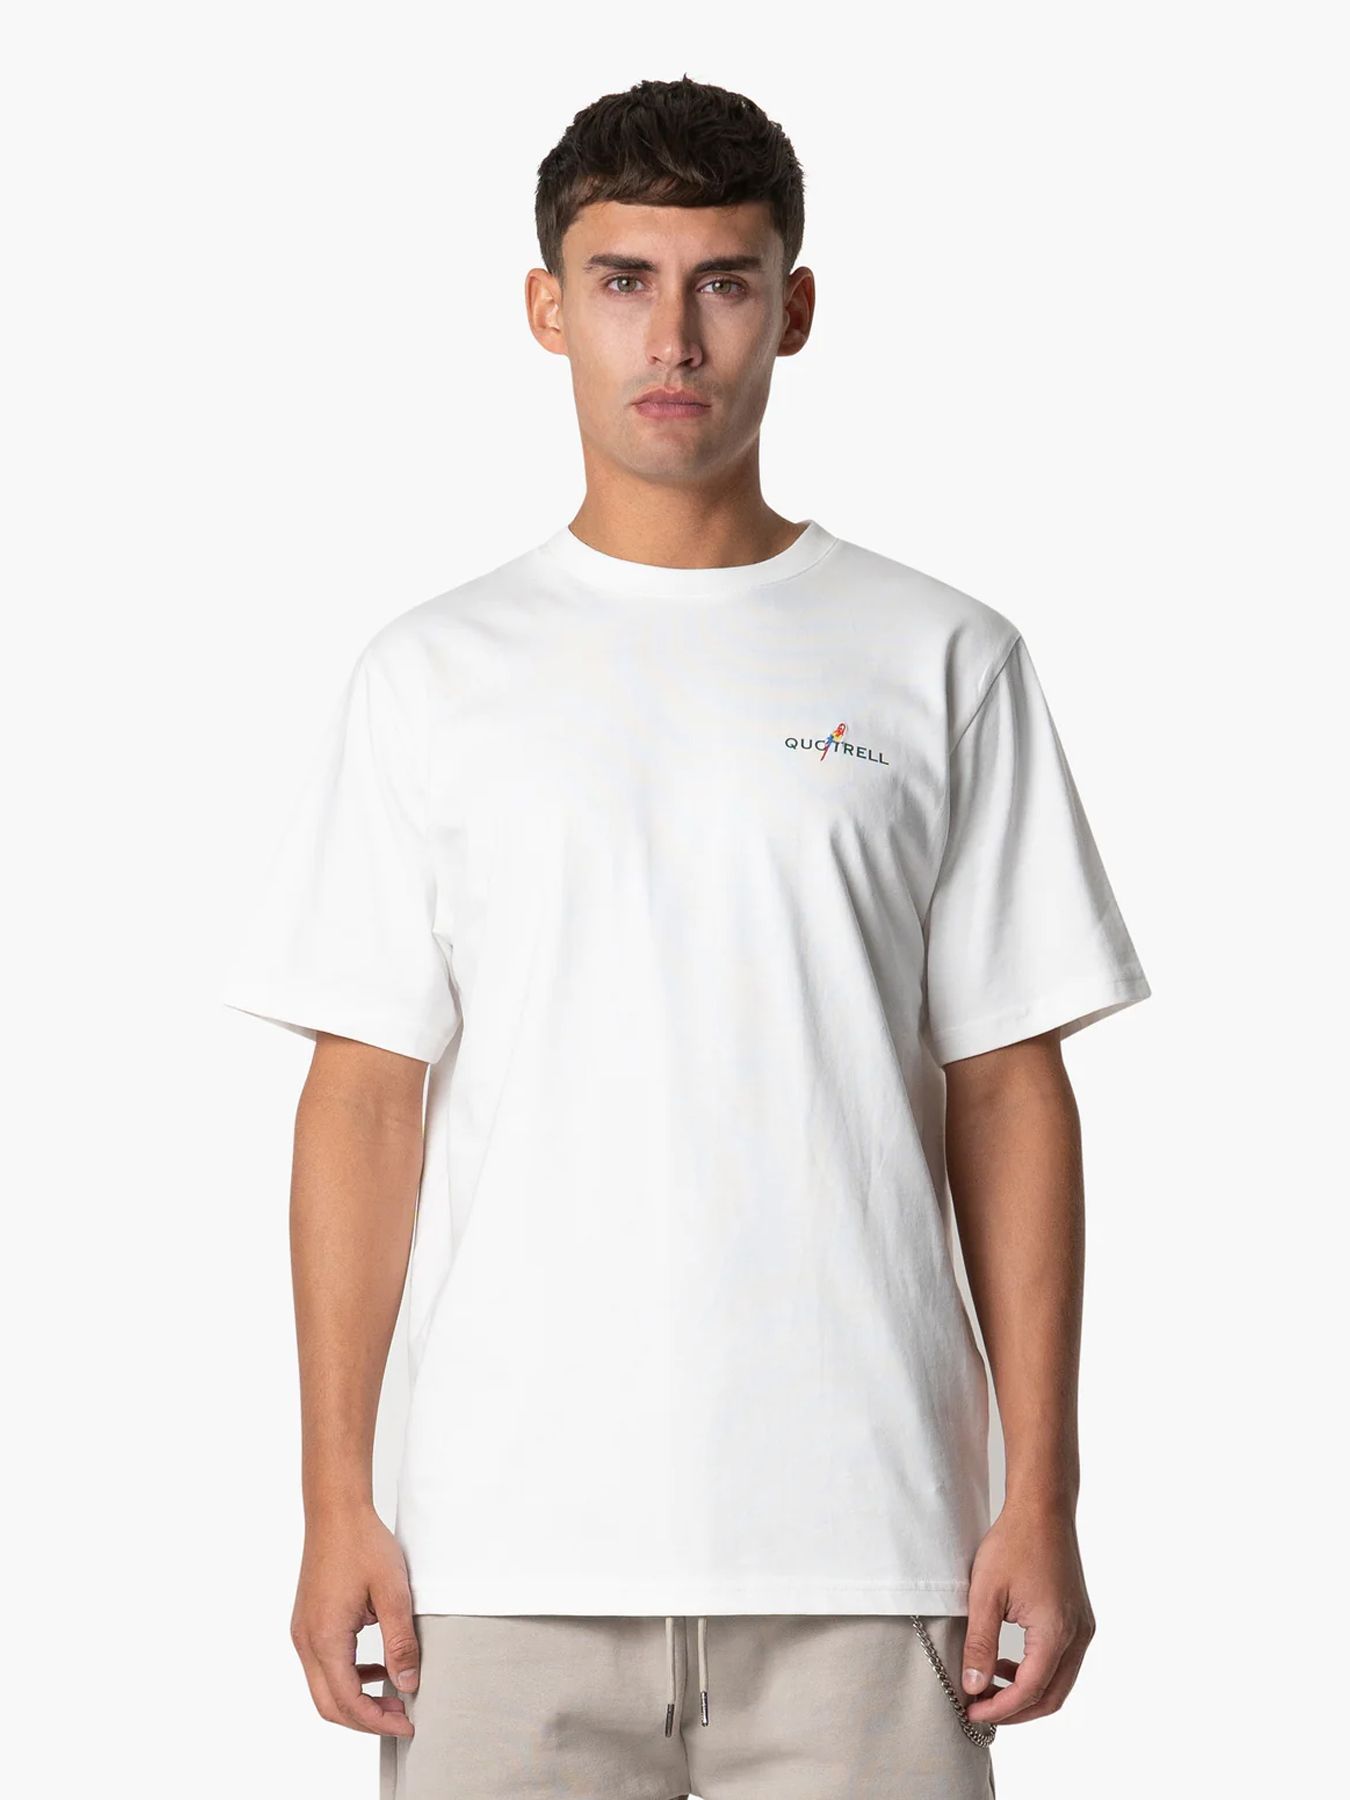 Quotrell Resort t-shirt Off White/green 00107925-OWG